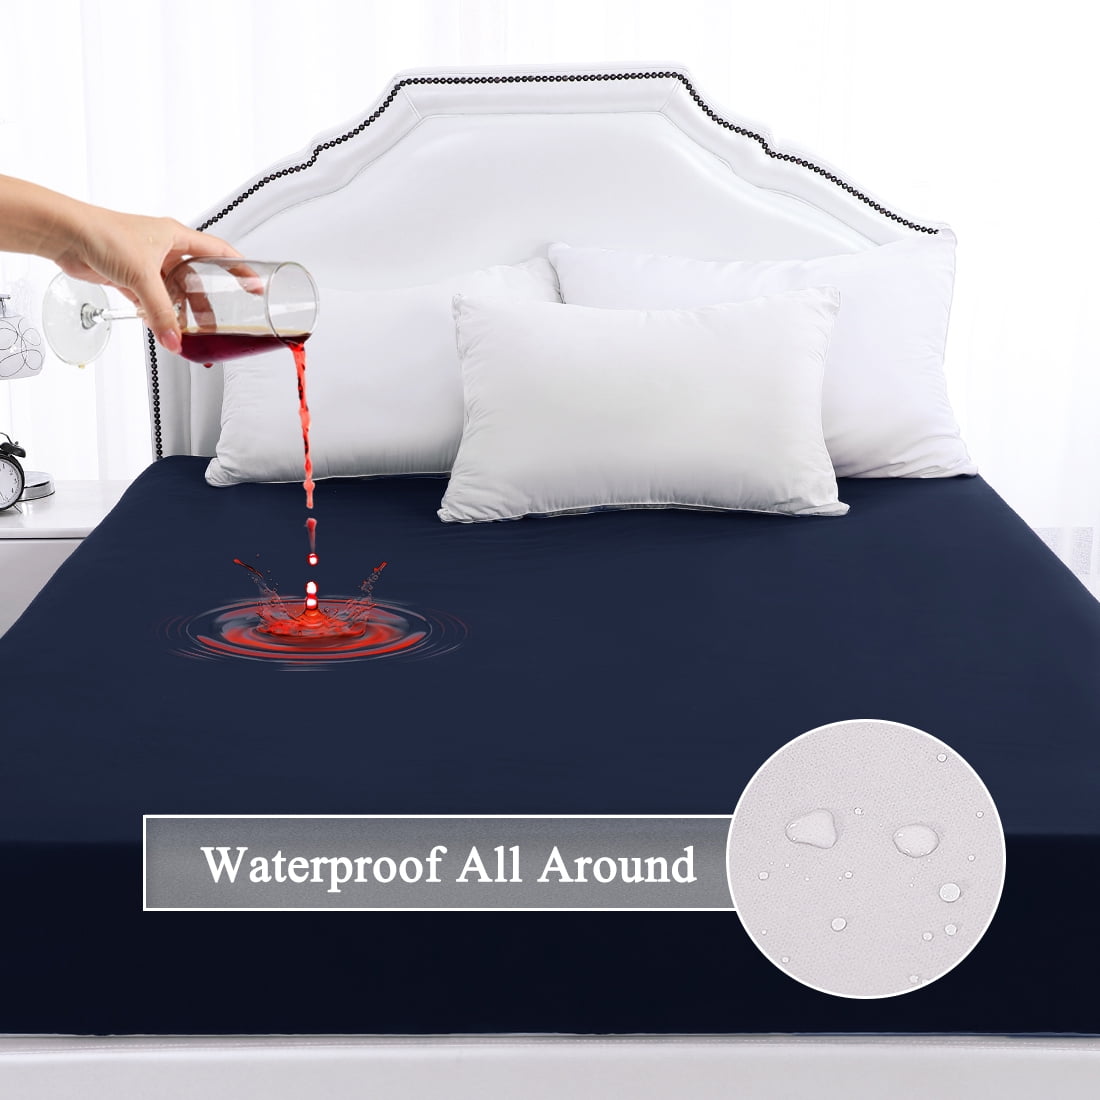 Waterproof All Around Mattress, Waterproof Twin Bed Cover